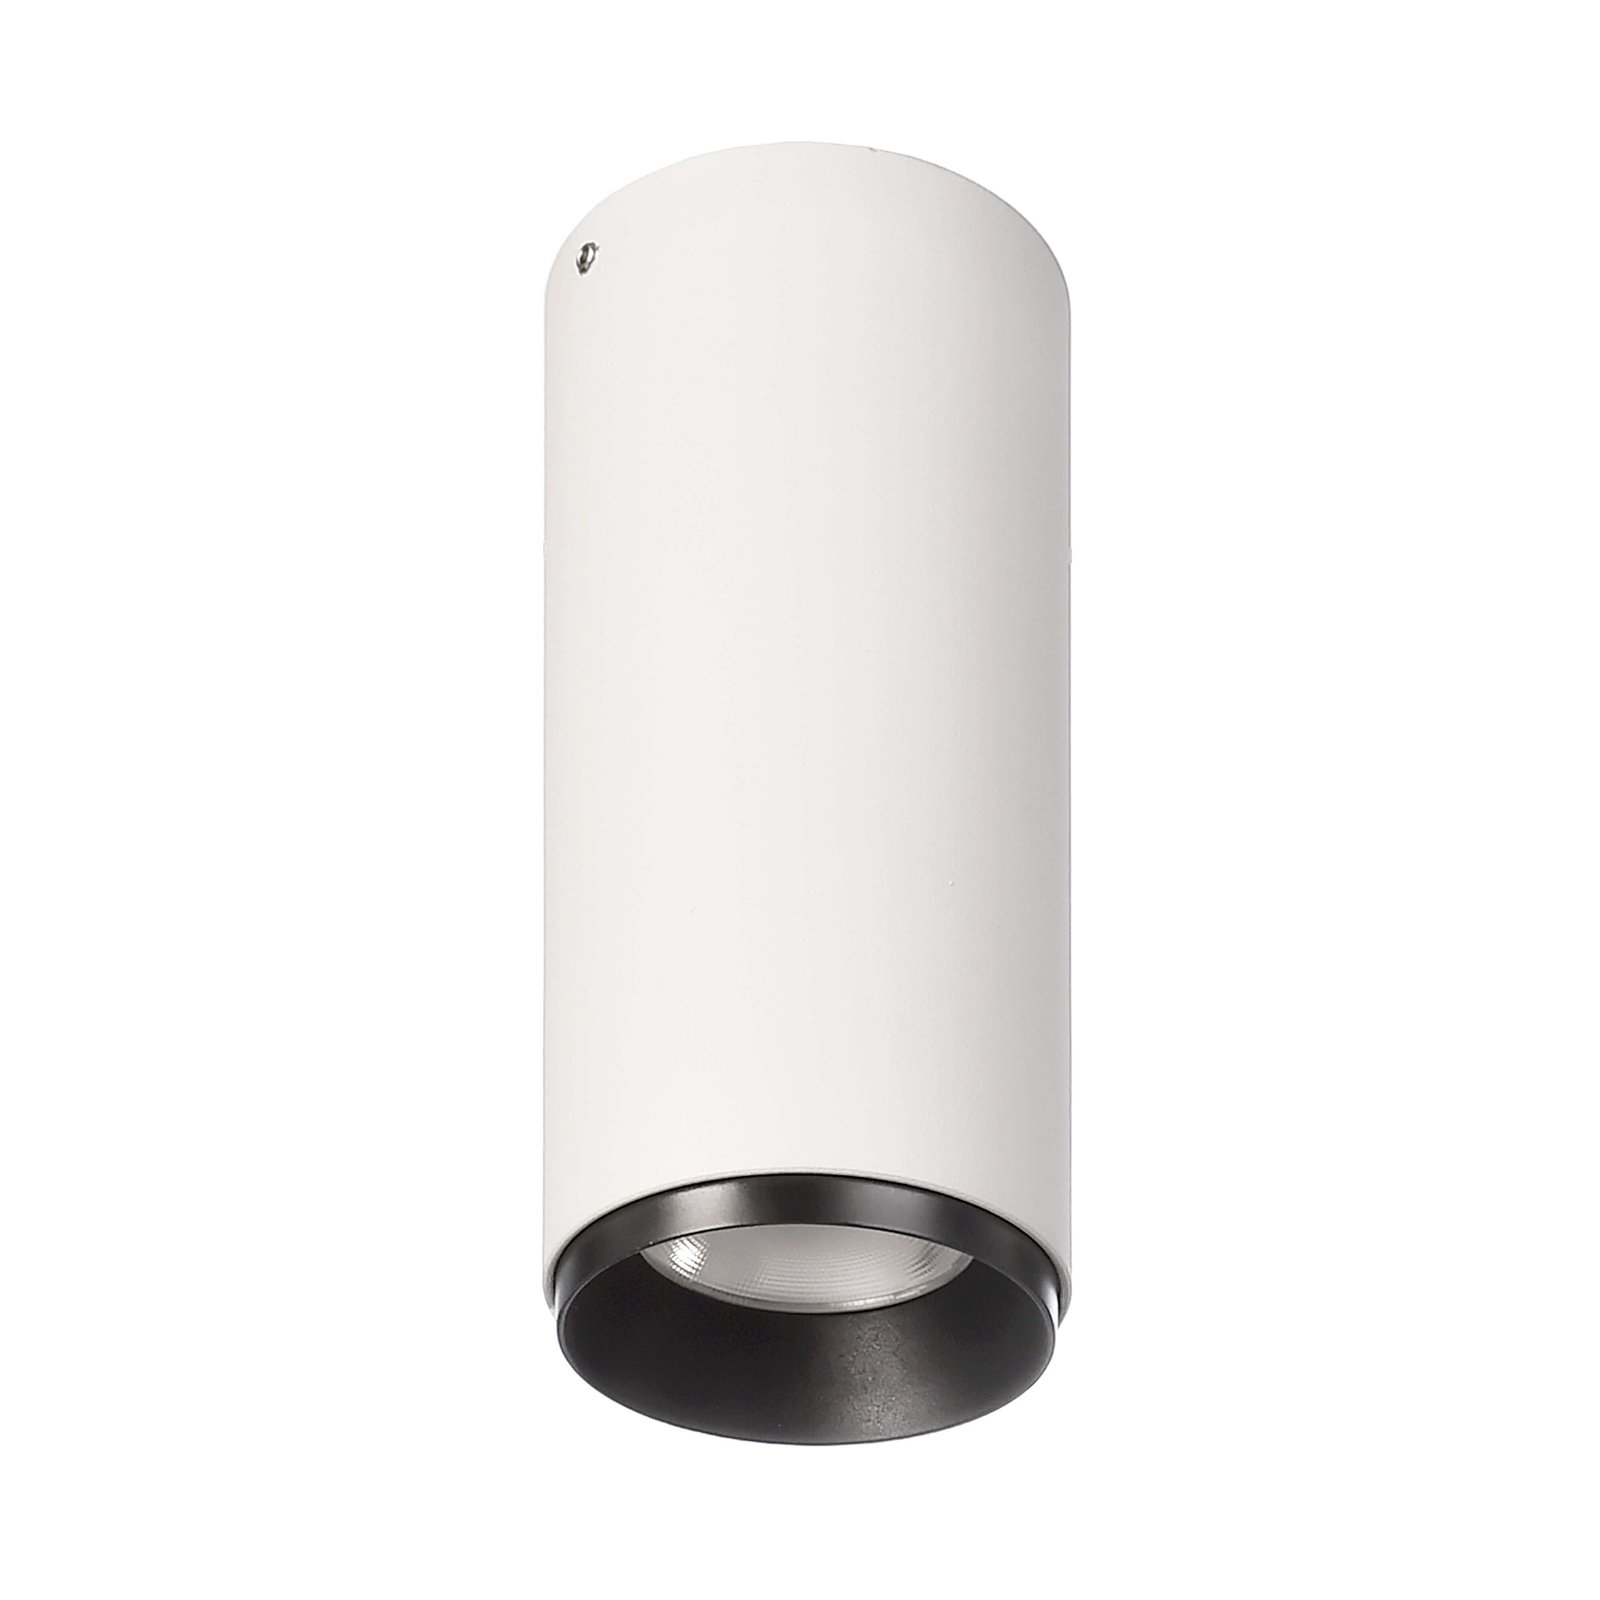 Downlight LED de superficie Lucea 10 W blanco